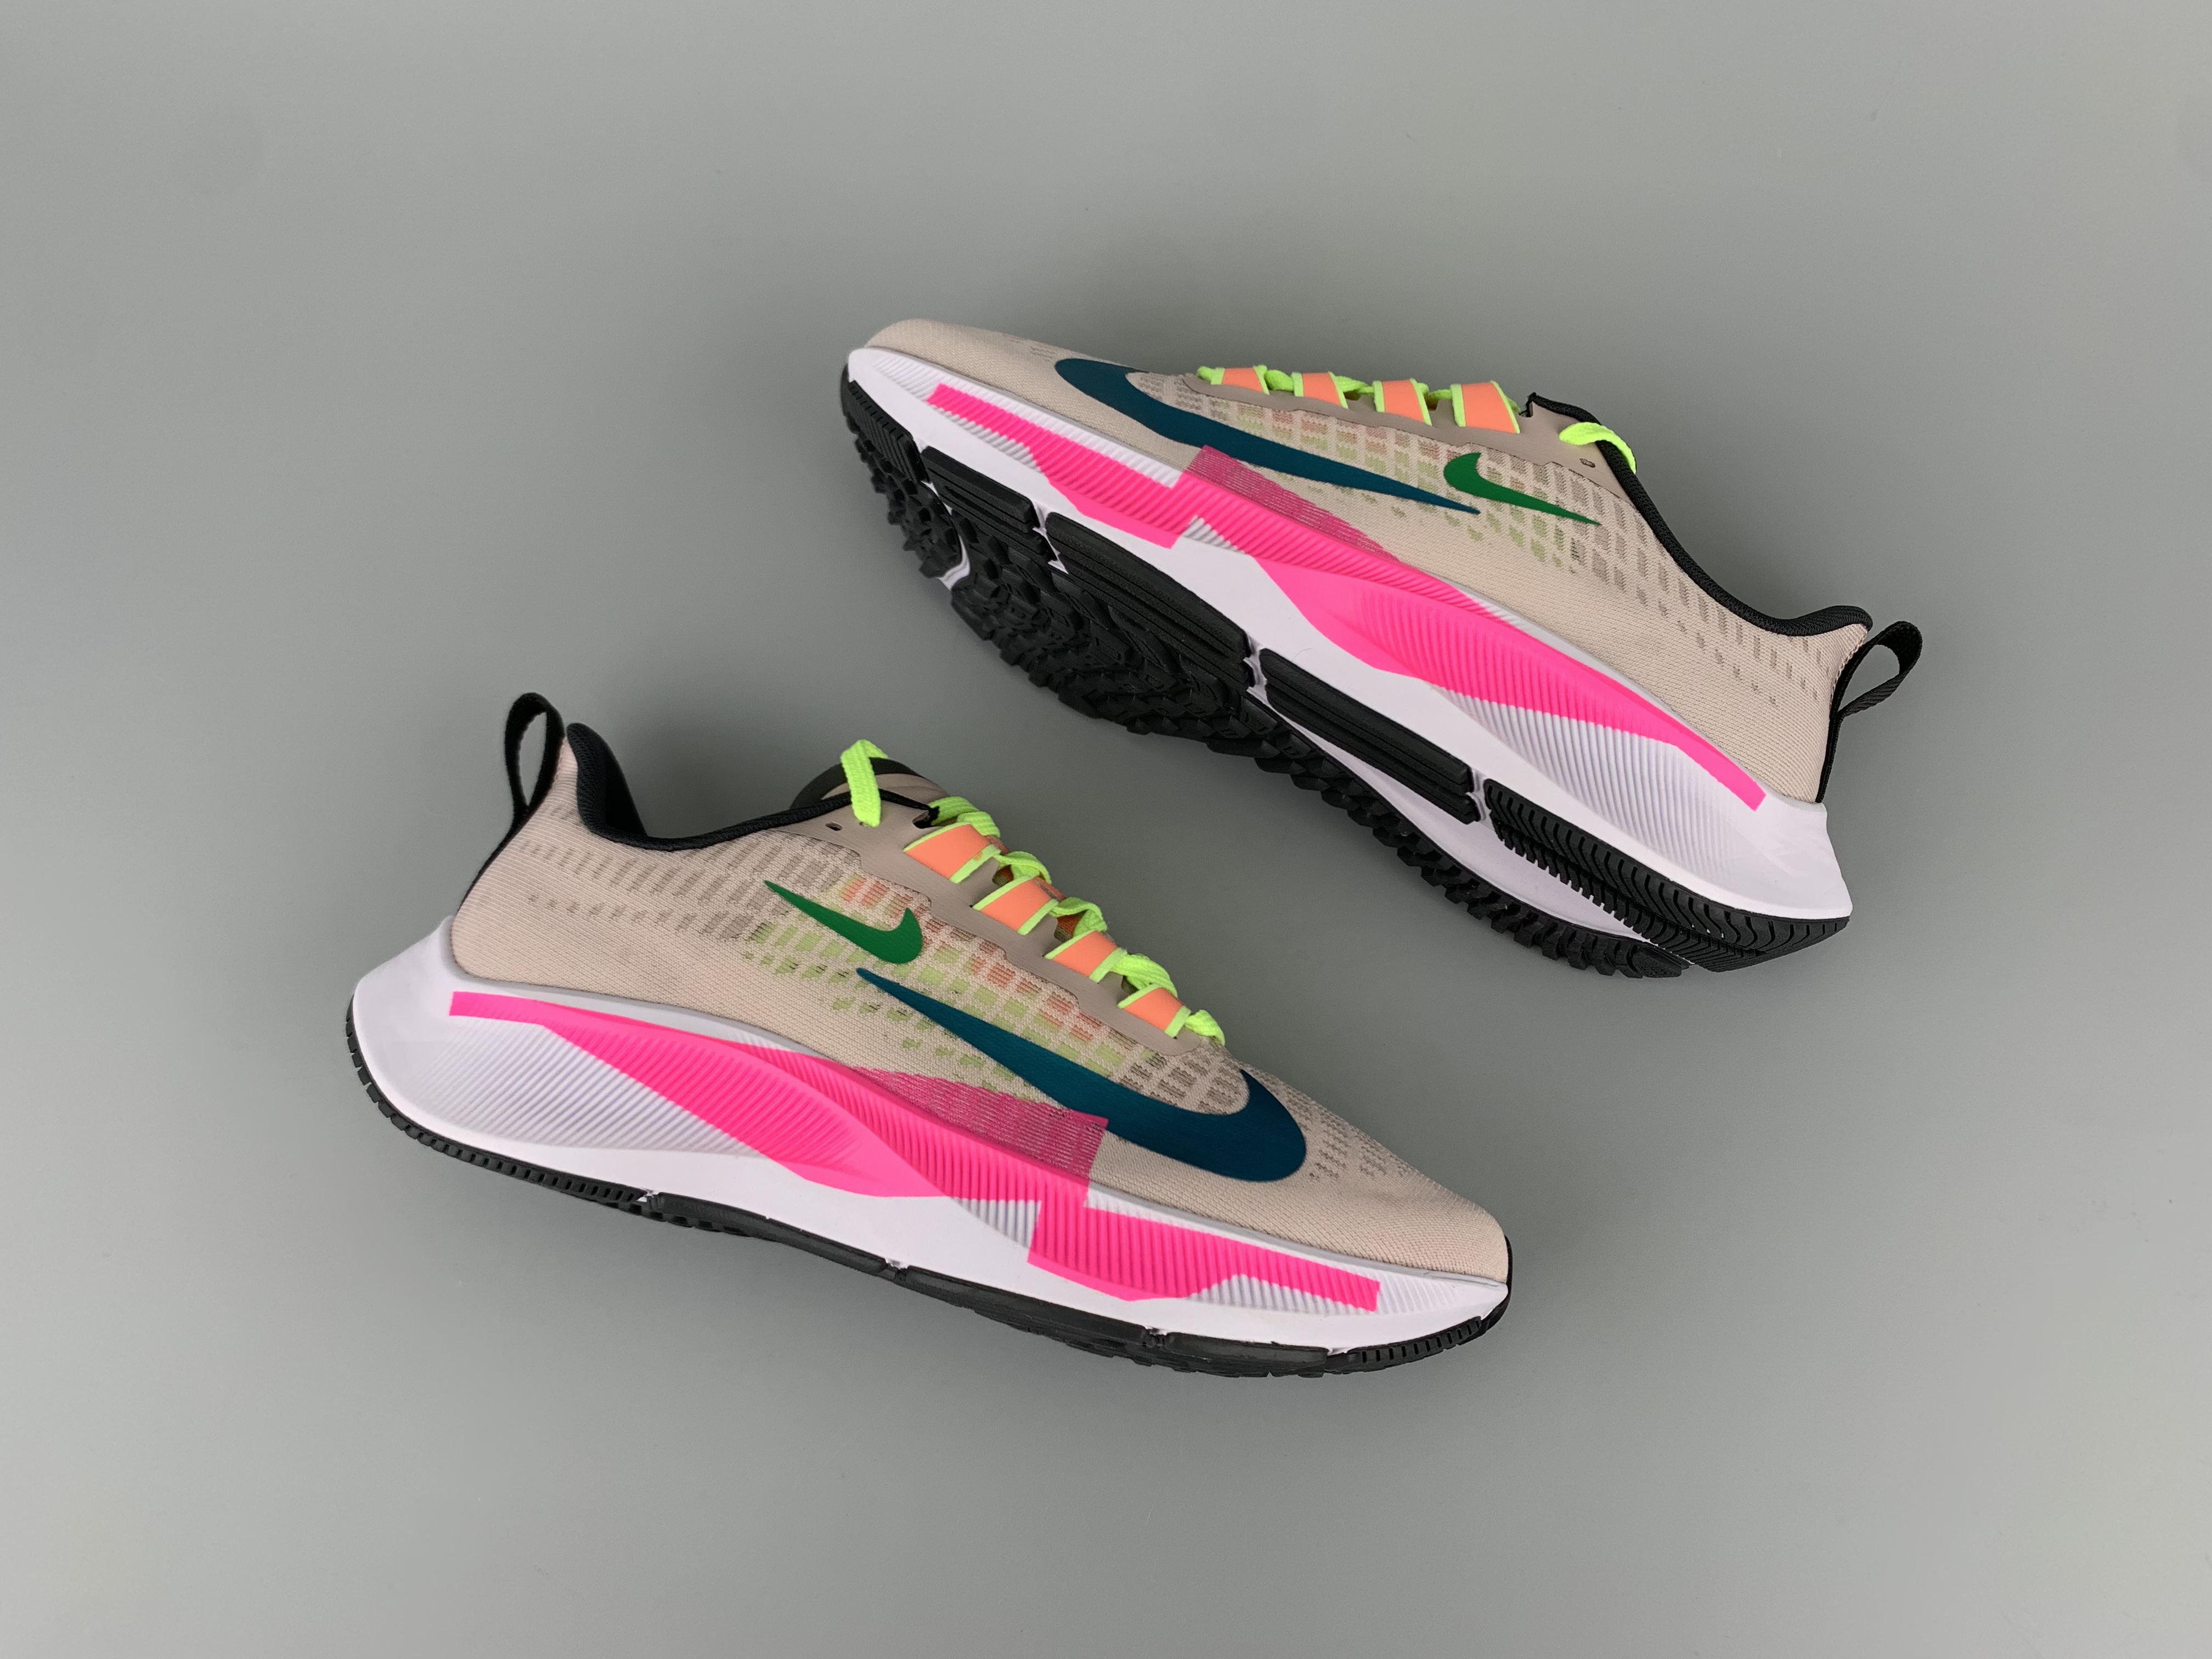 New Nike Zoom Pegasus 37 Rose Gold Peach Black White Running Shoes For Women